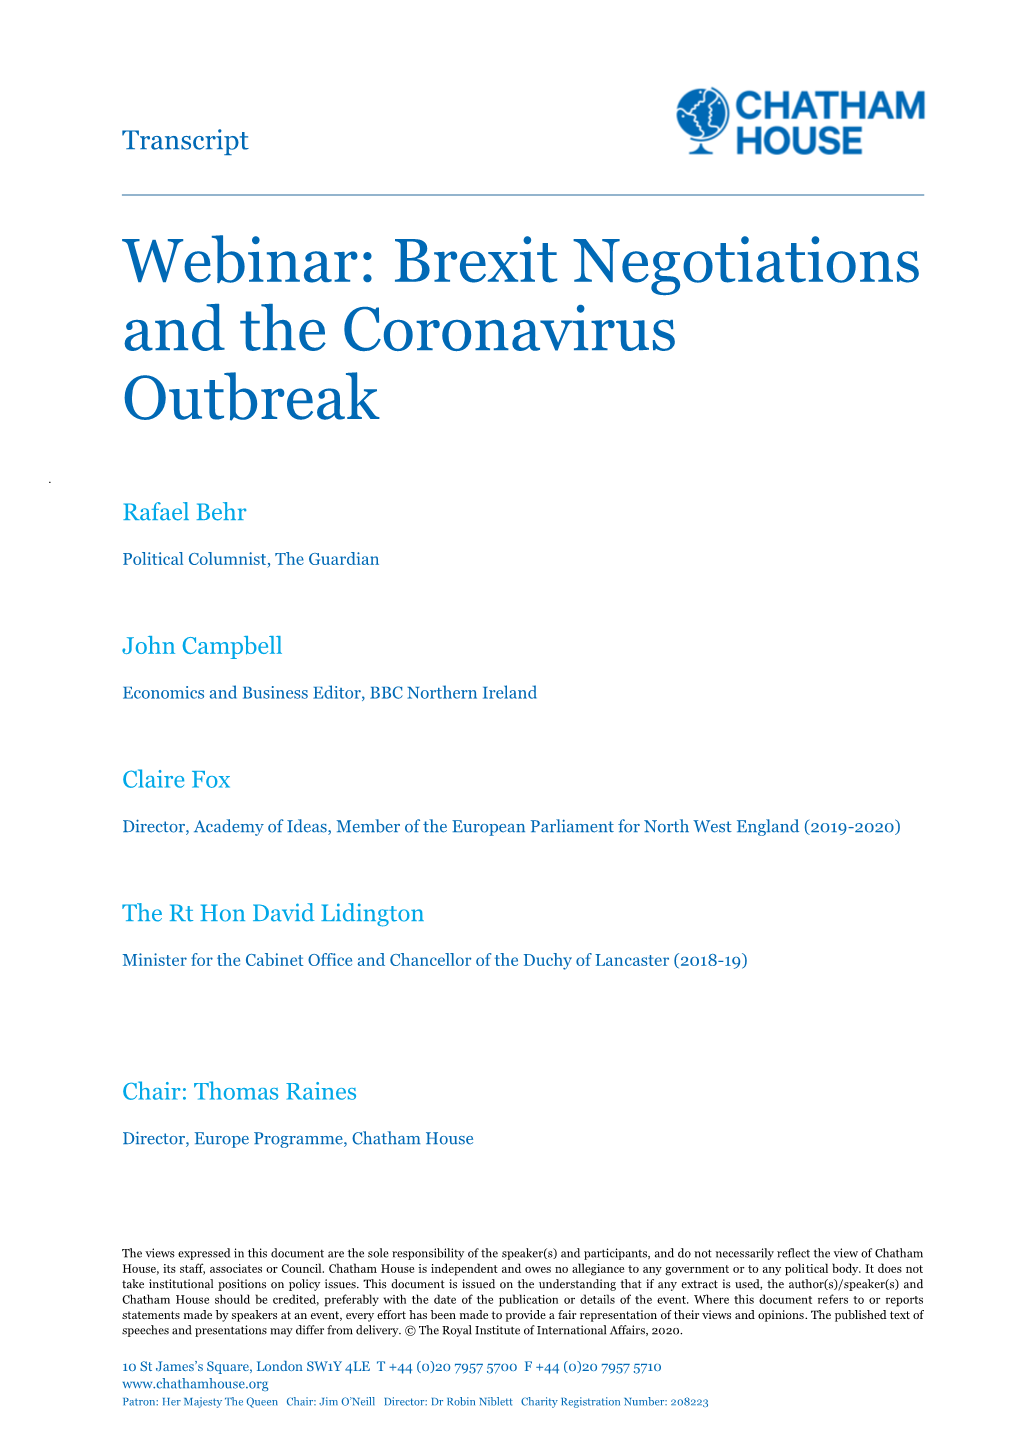 Webinar: Brexit Negotiations and the Coronavirus Outbreak